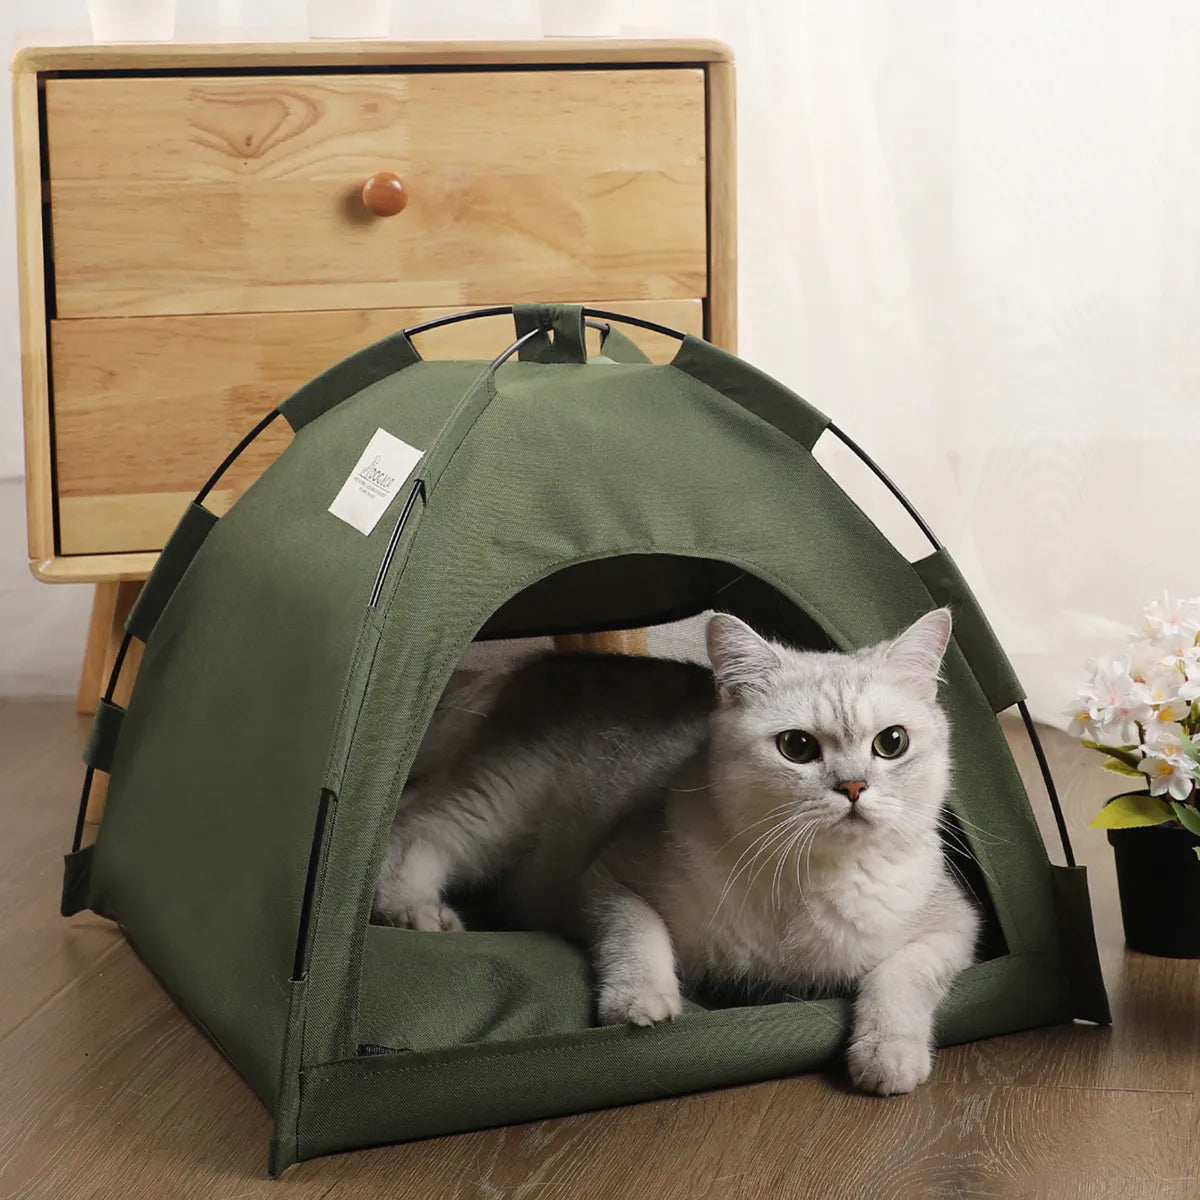 Winter Clamshell Kitten Tents Cat